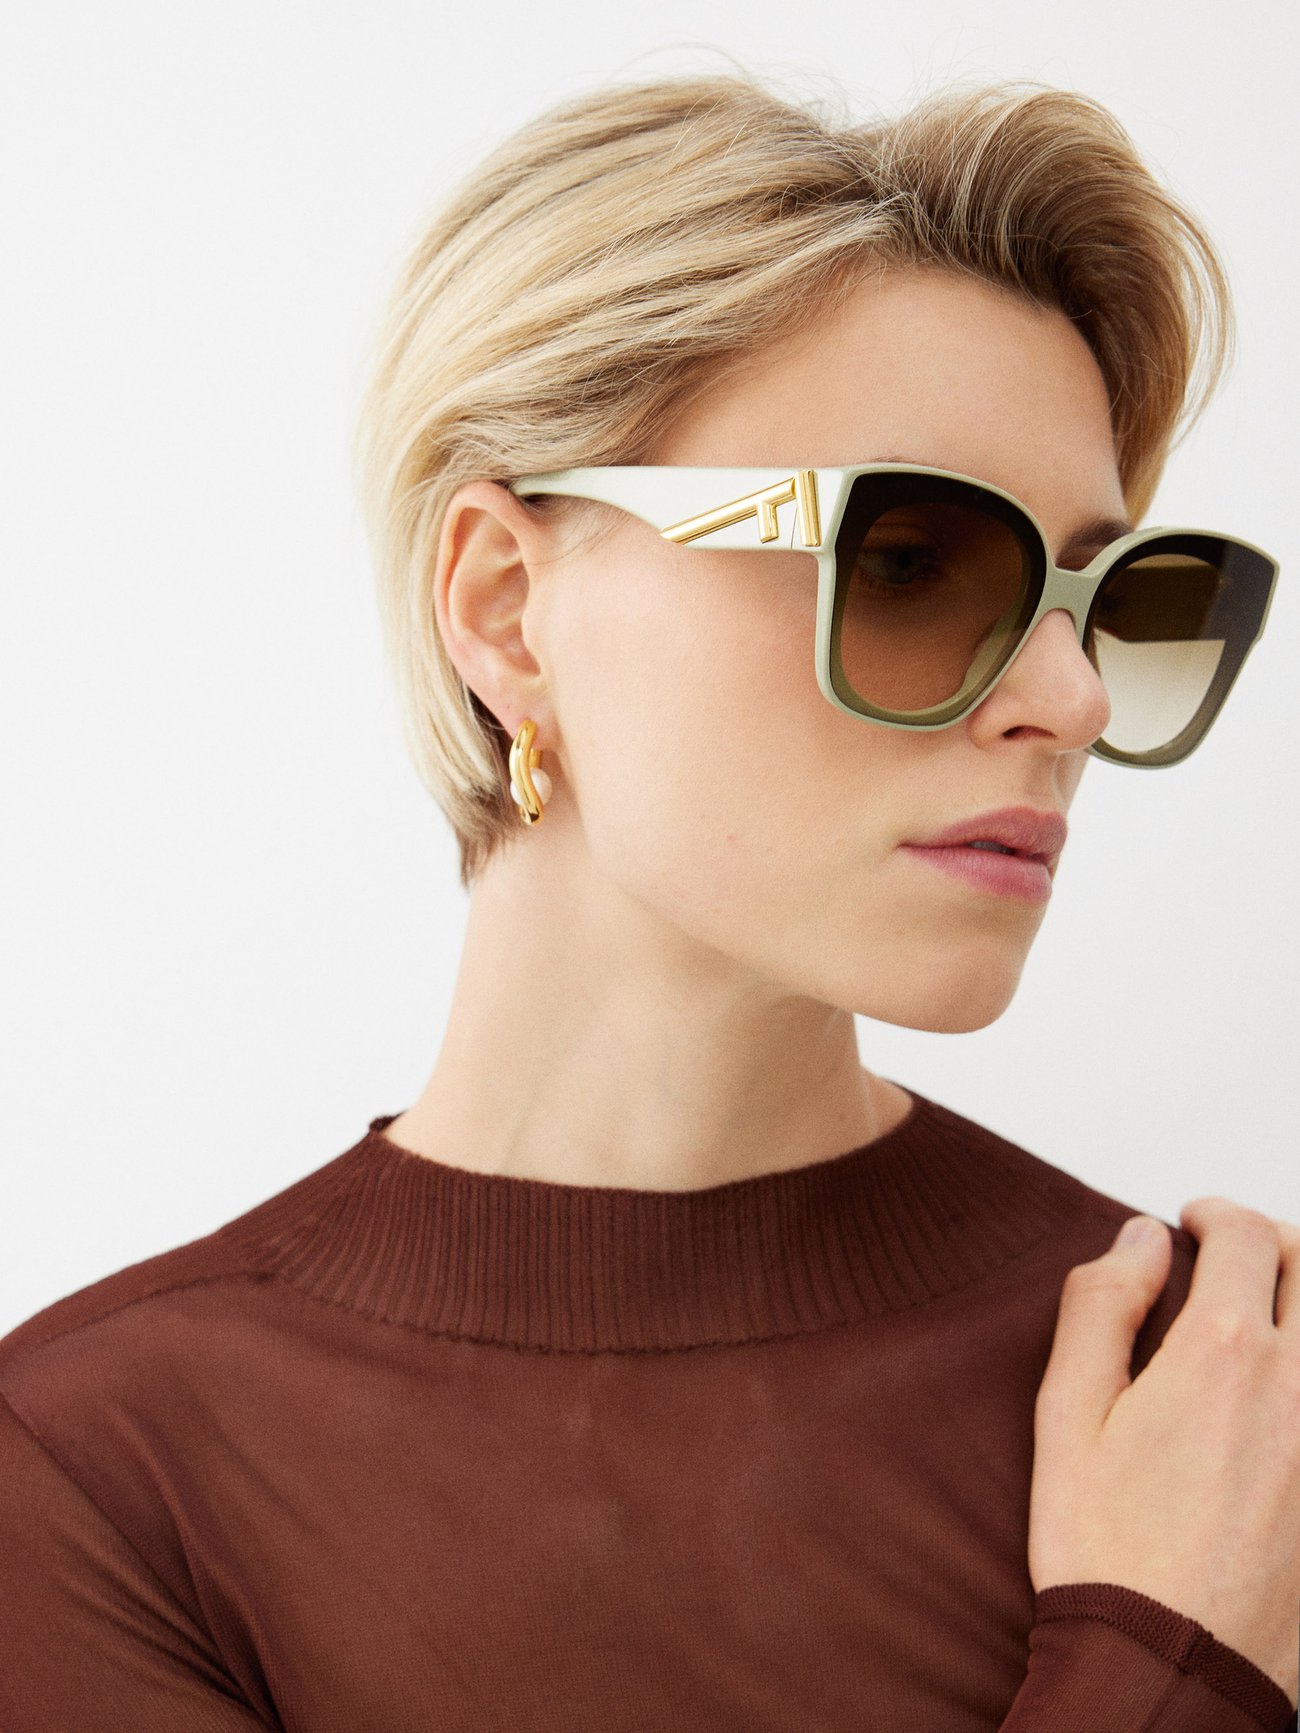 Fendi First Sight Rectangular Sunglasses in Multicoloured - Fendi